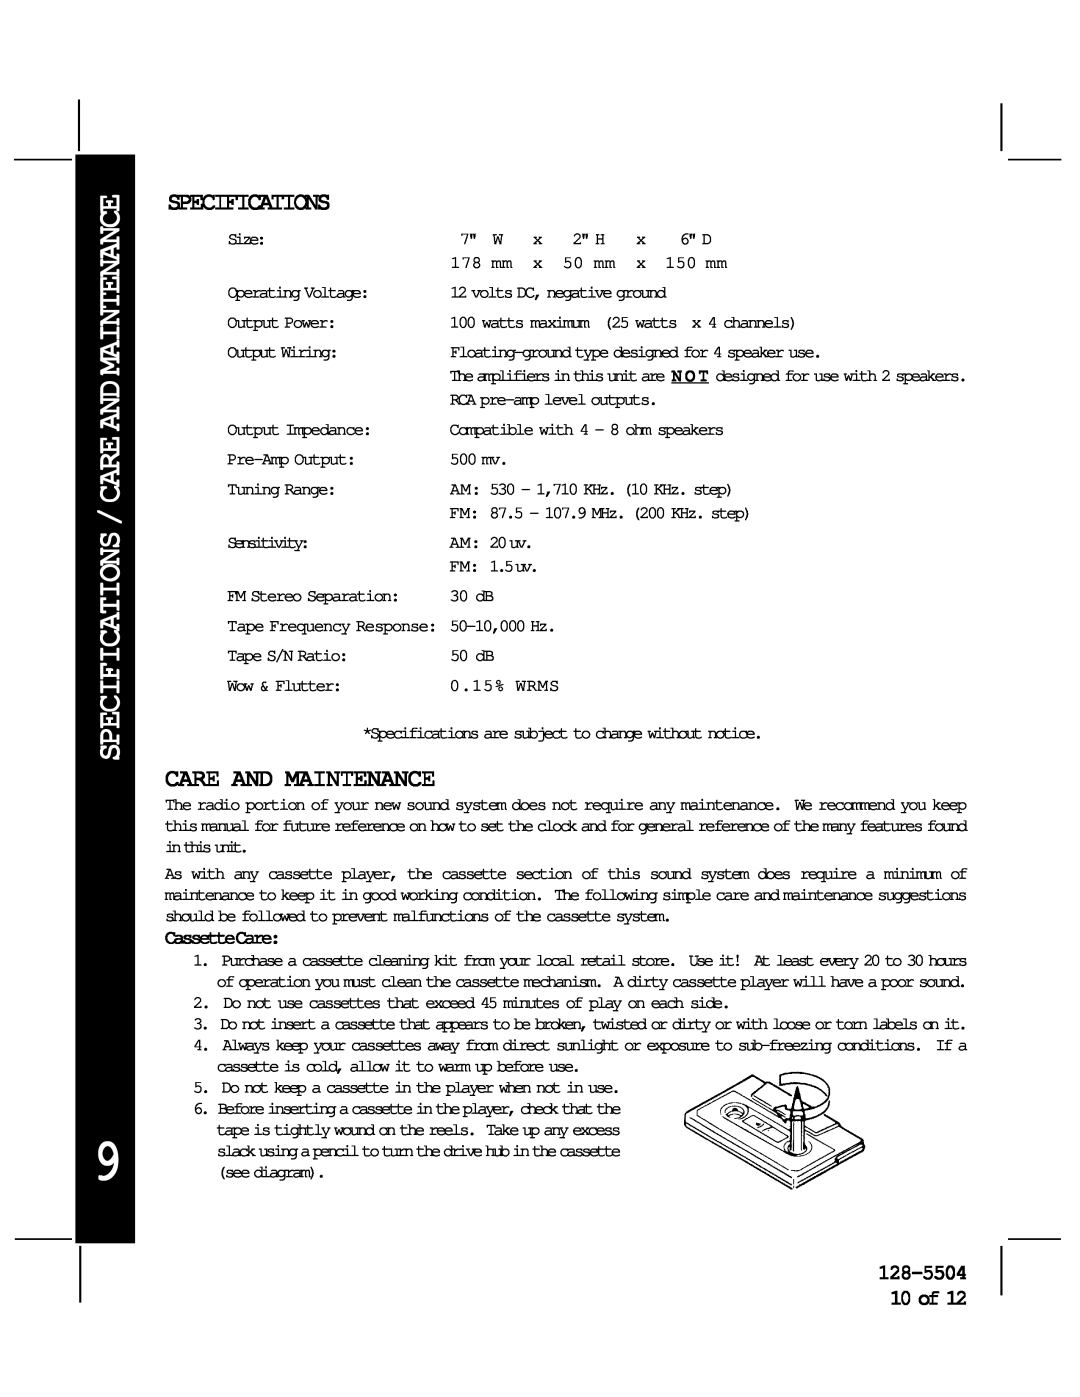 Audiovox AV-455 manual Specifications/Careandmaintenance, Care And Maintenance, 128-5504 10 of, CassetteCare 